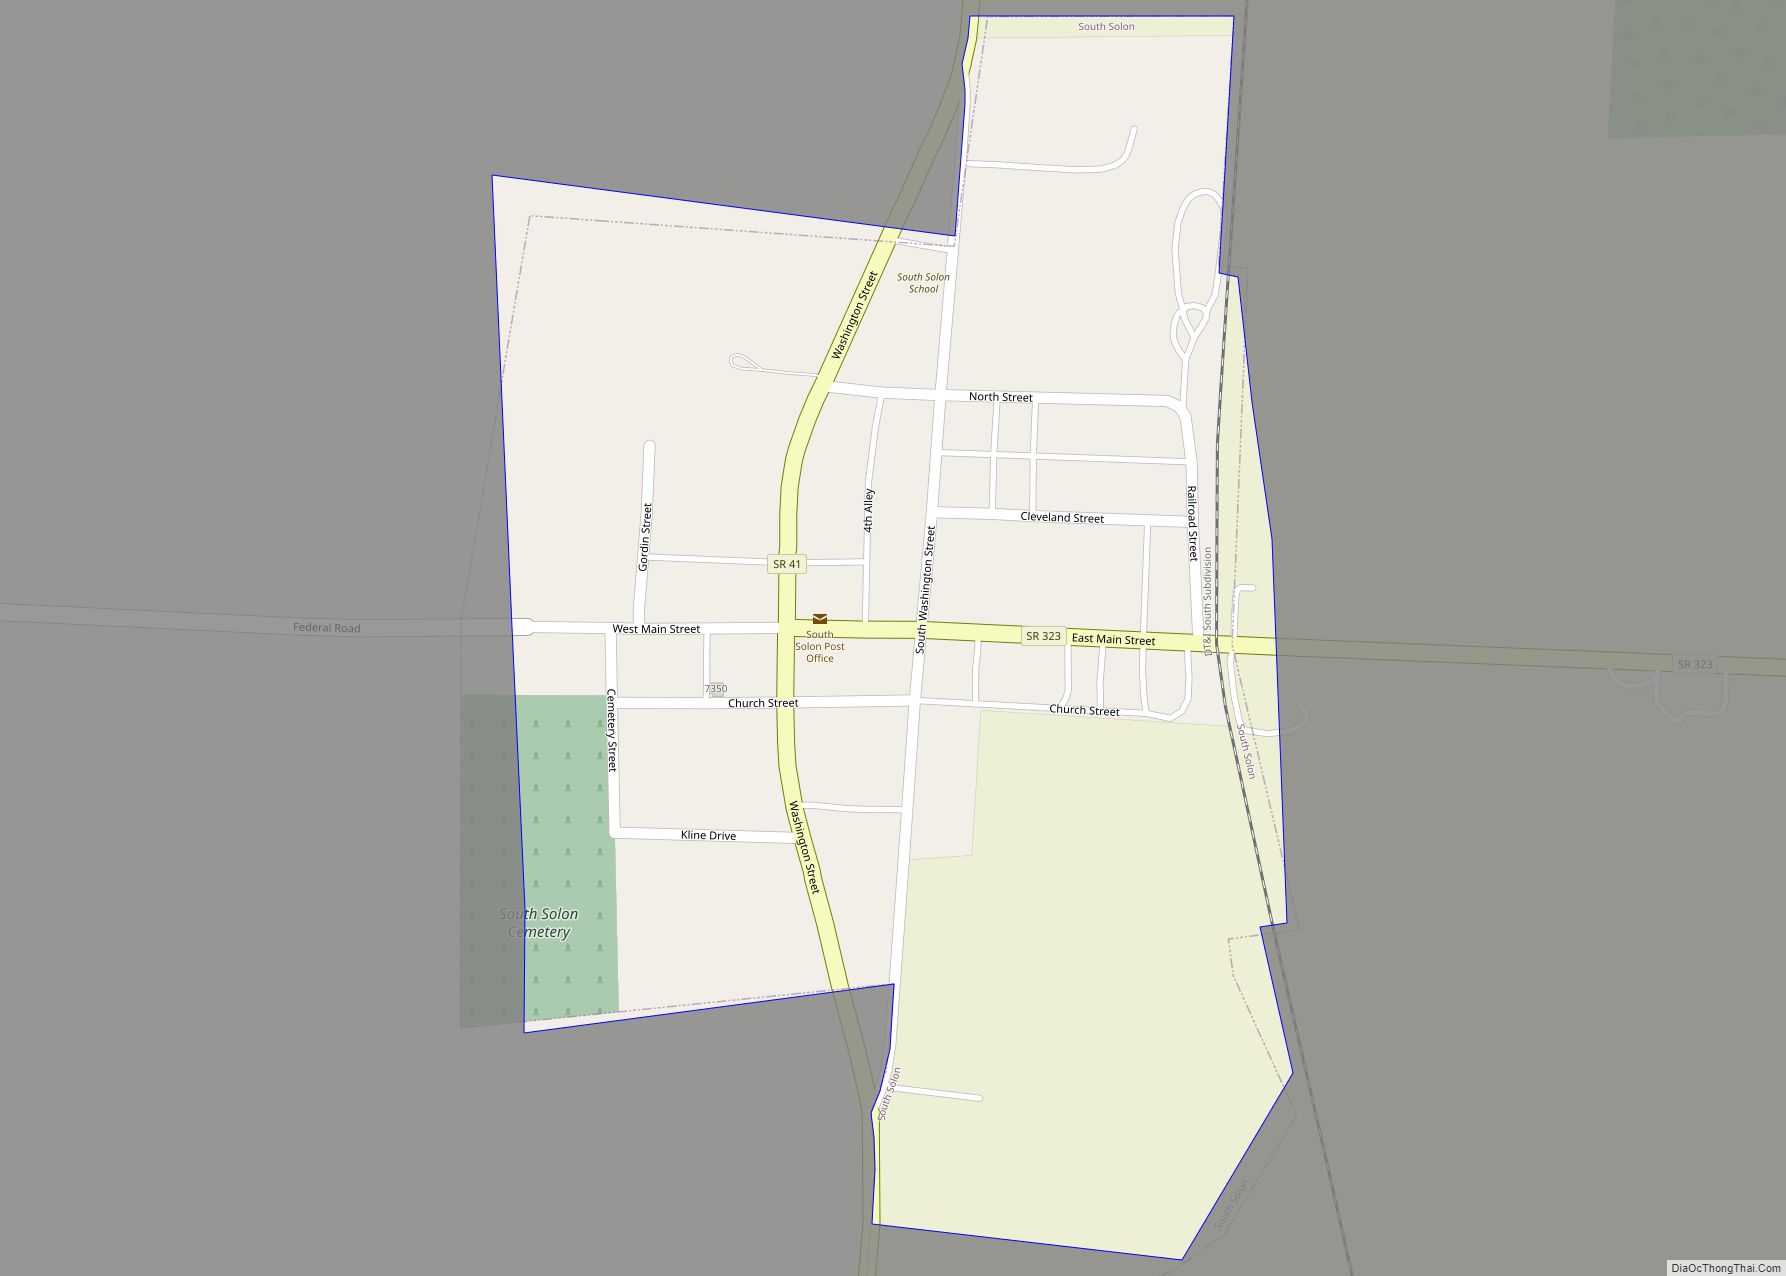 Map of South Solon village